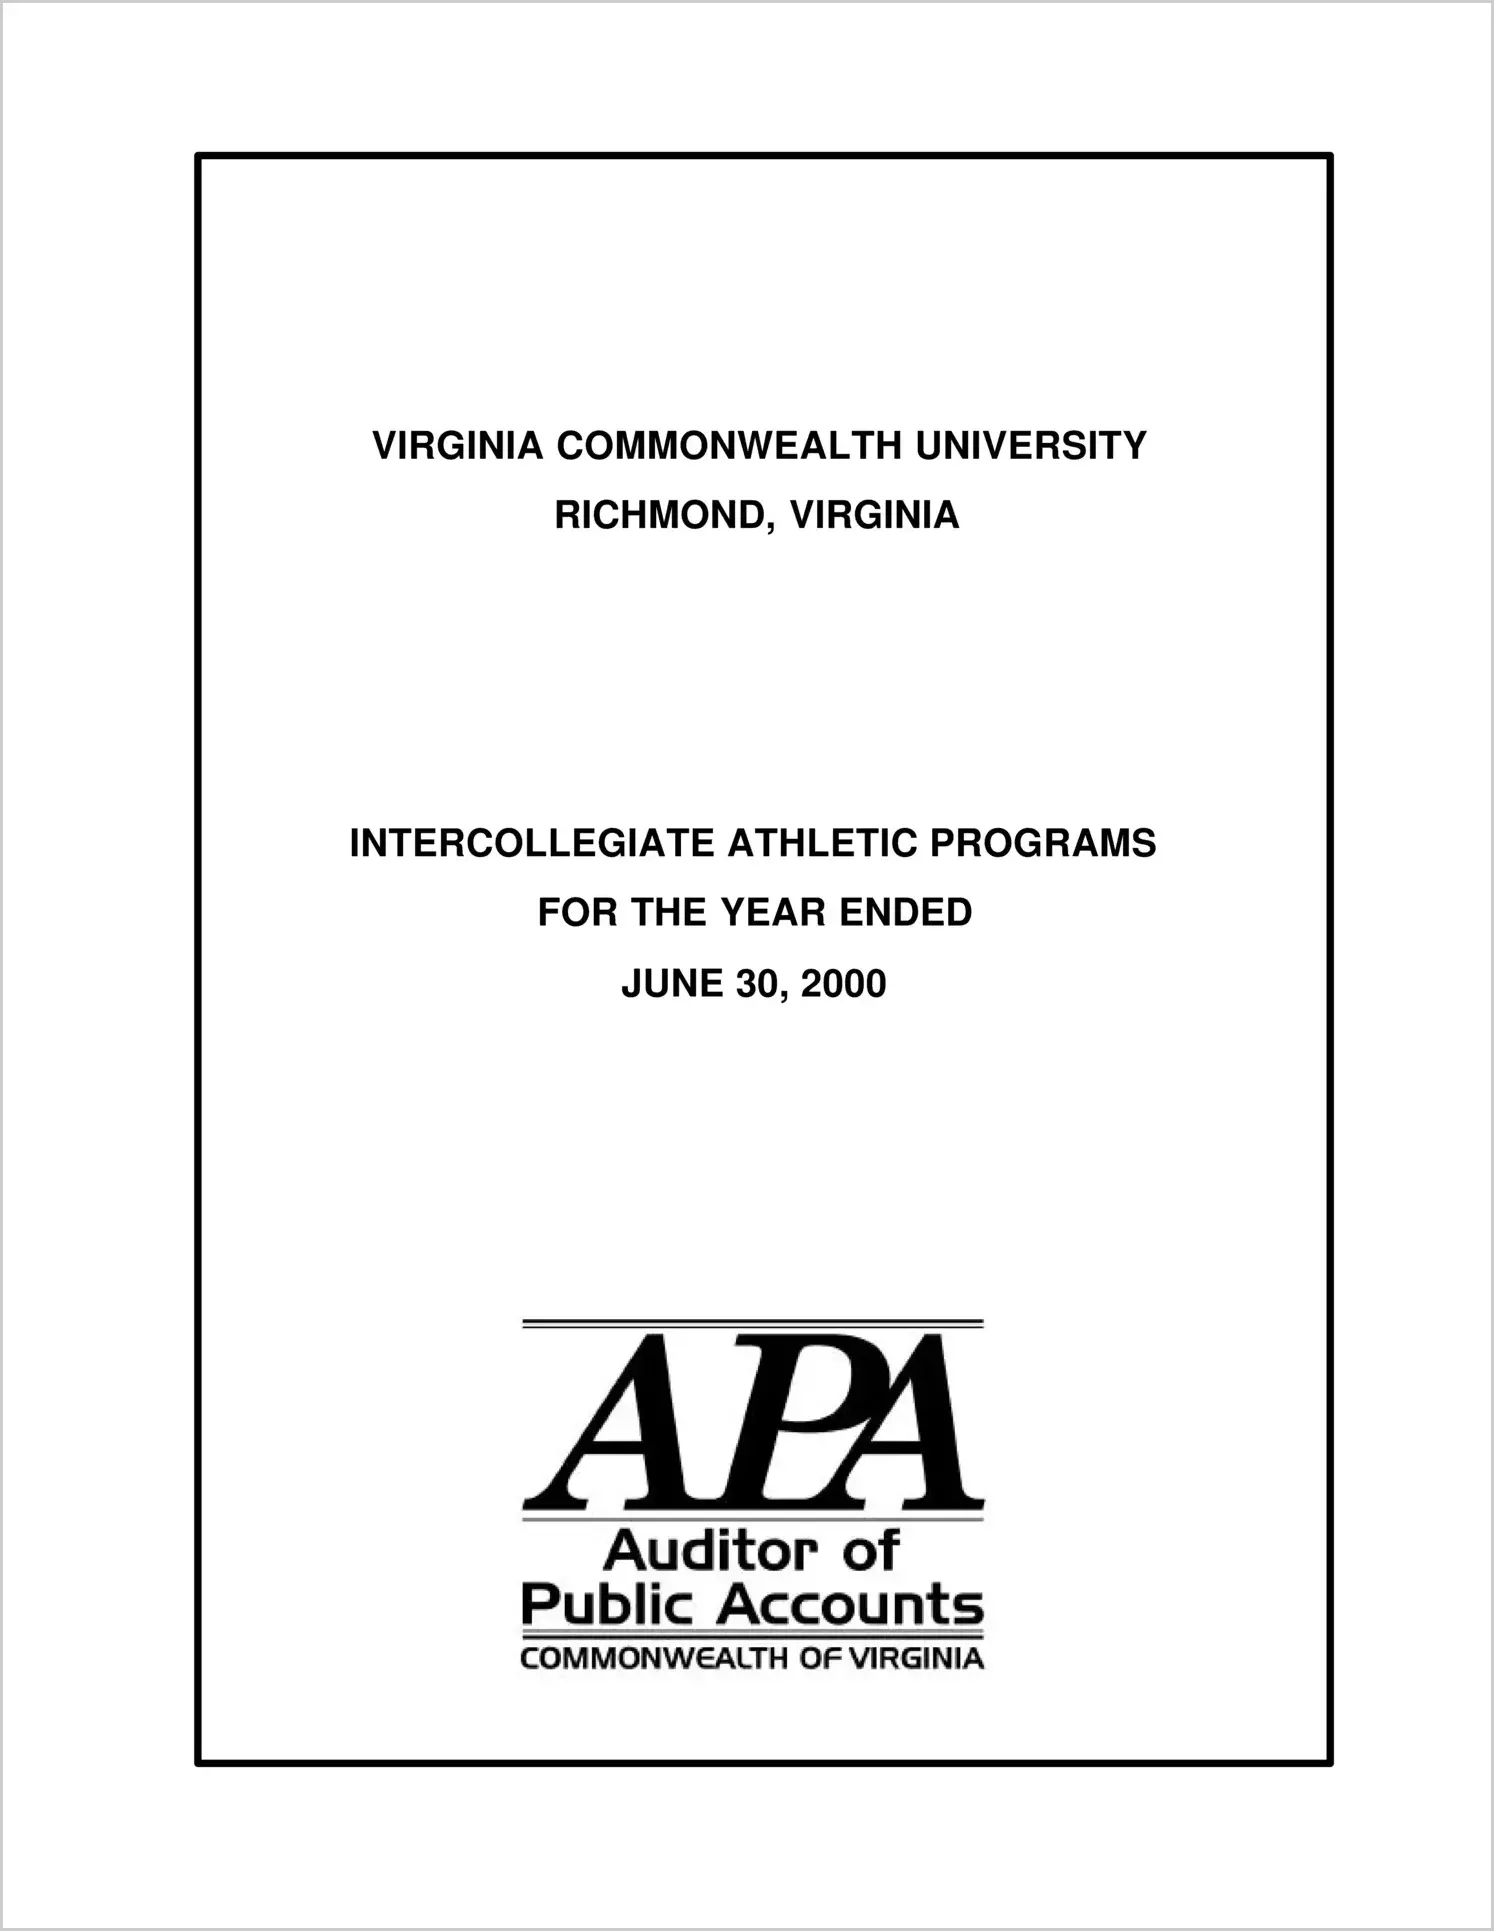 Virginia Commonwealth University Intercollegiate Athletics Programs for the year ended June 30, 2000